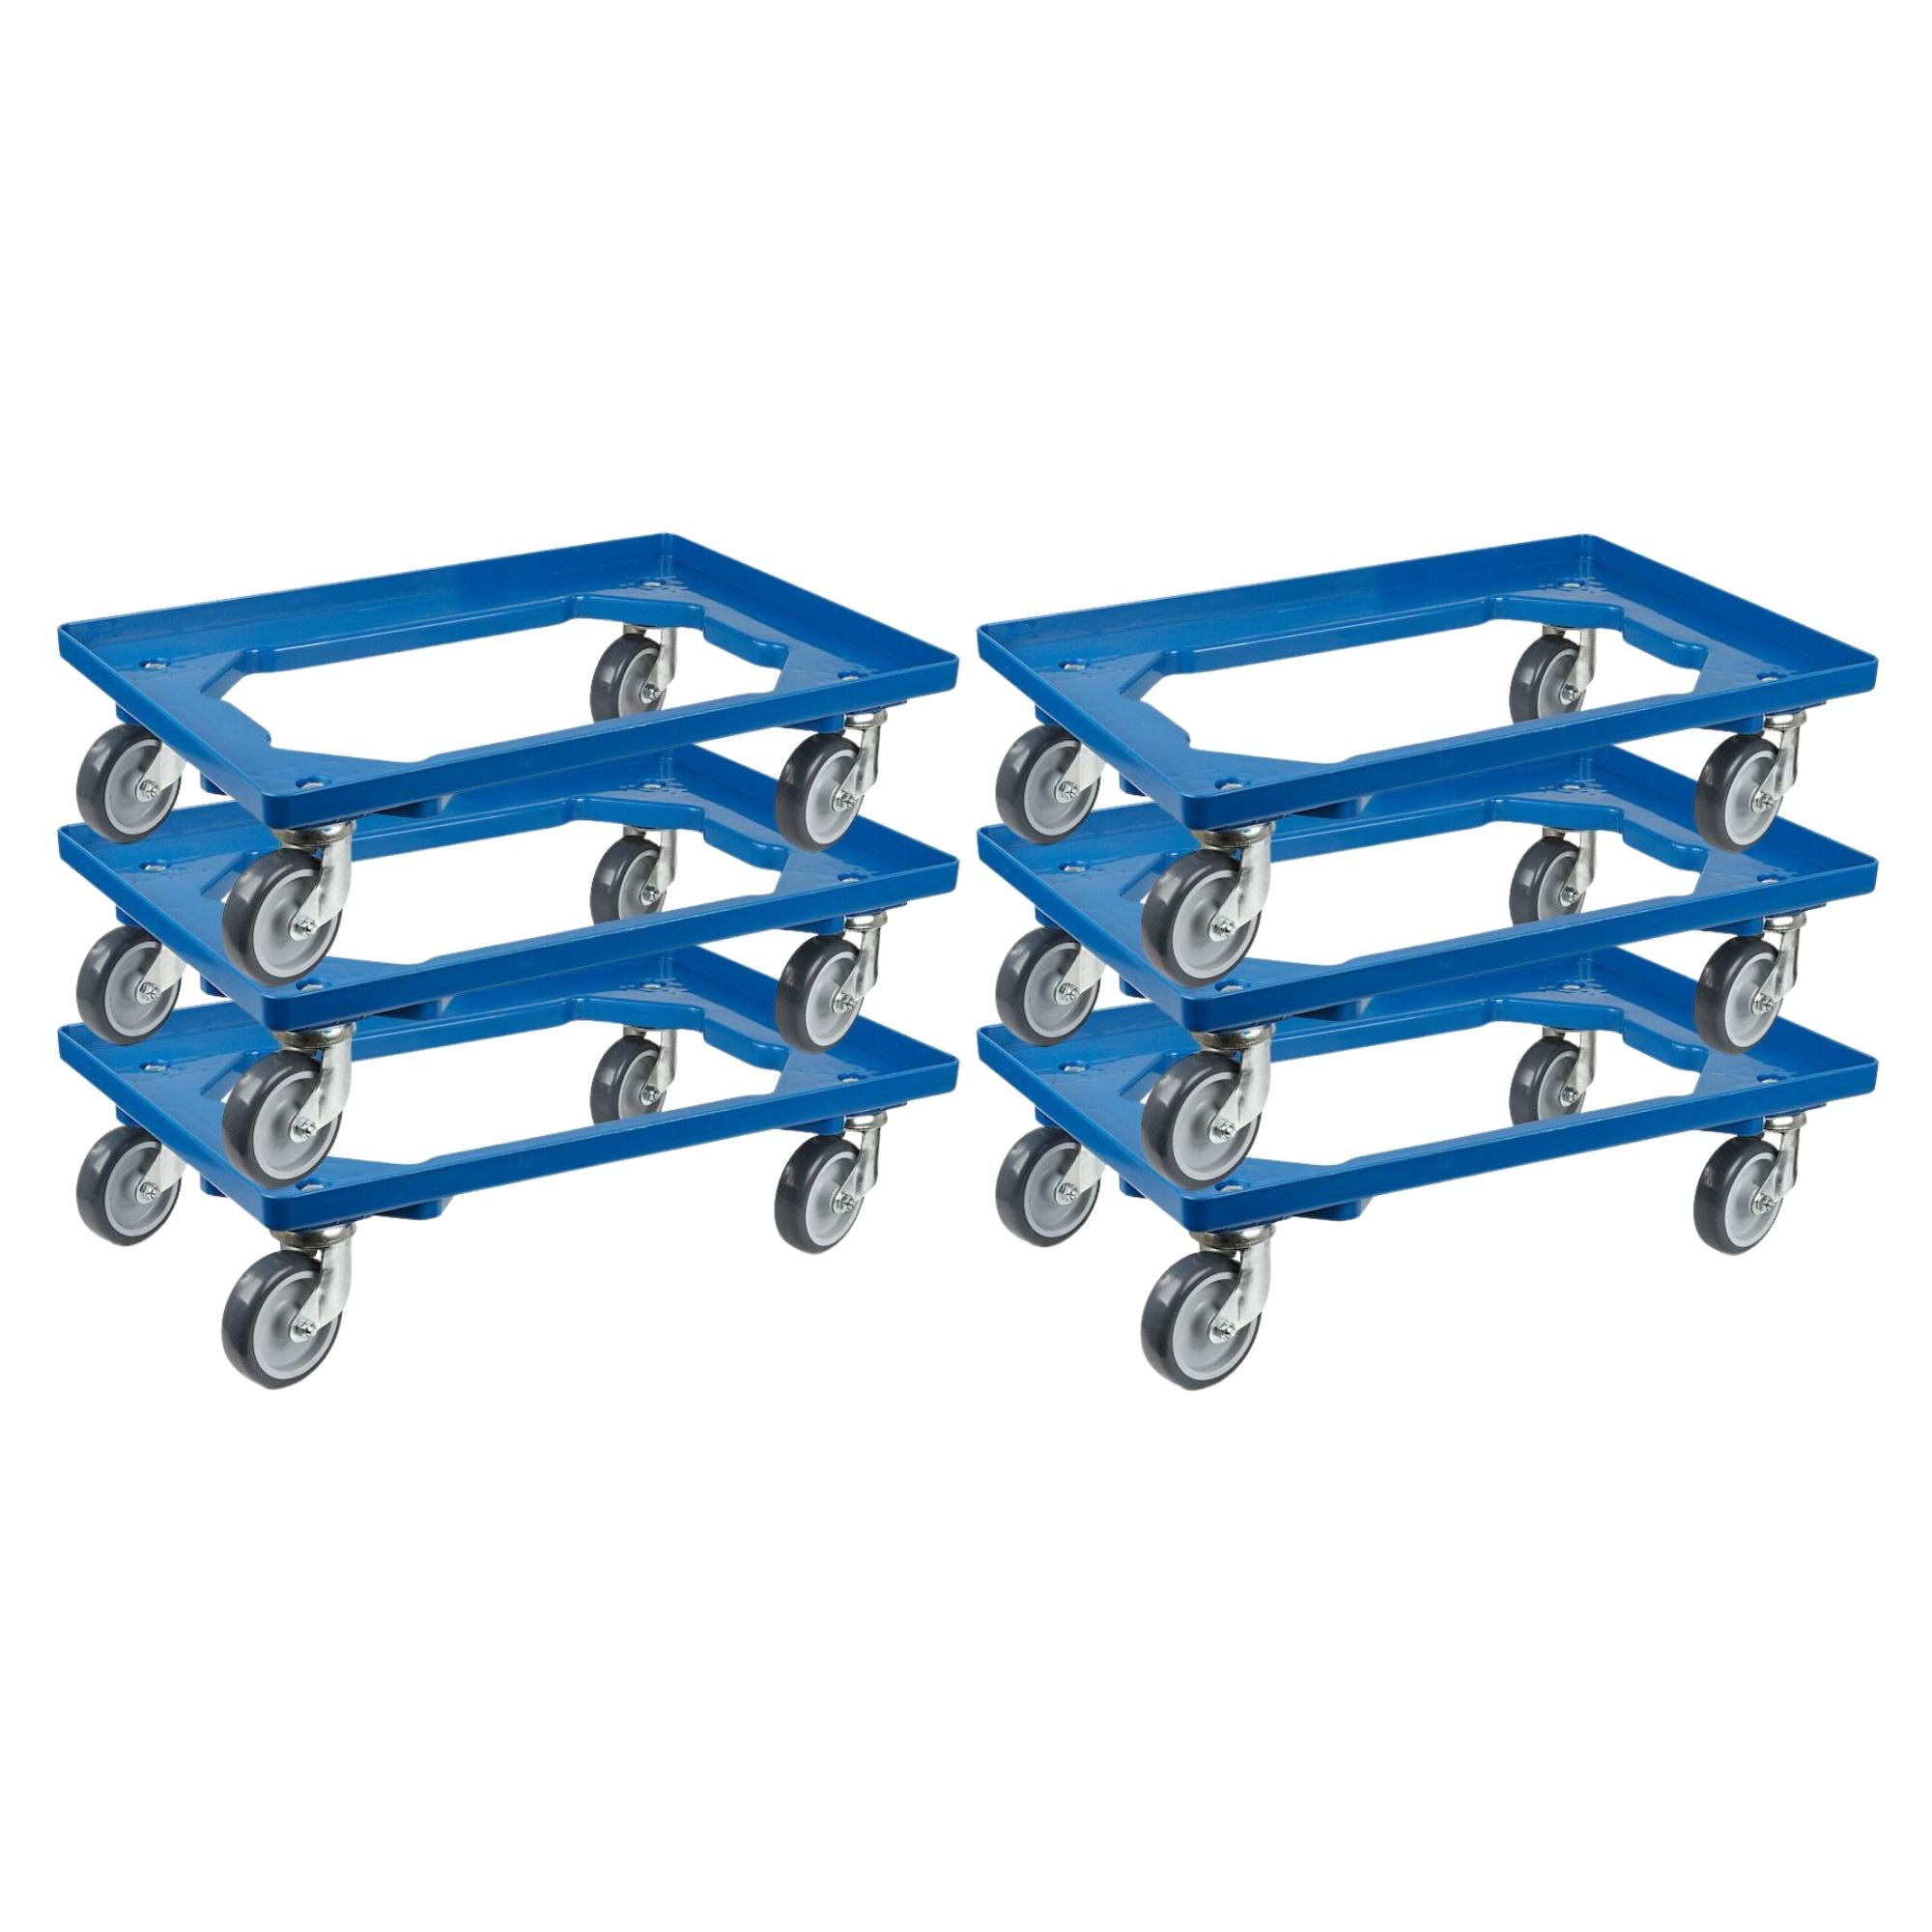 SparSet 6x Transportroller für Euroboxen 60x40cm mit Gummiräder blau | Offenes Deck | 2 Lenkrollen & 2 Bremsrollen | Traglast 300kg | Kistenroller Logistikroller Rollwagen Profi-Fahrgestell